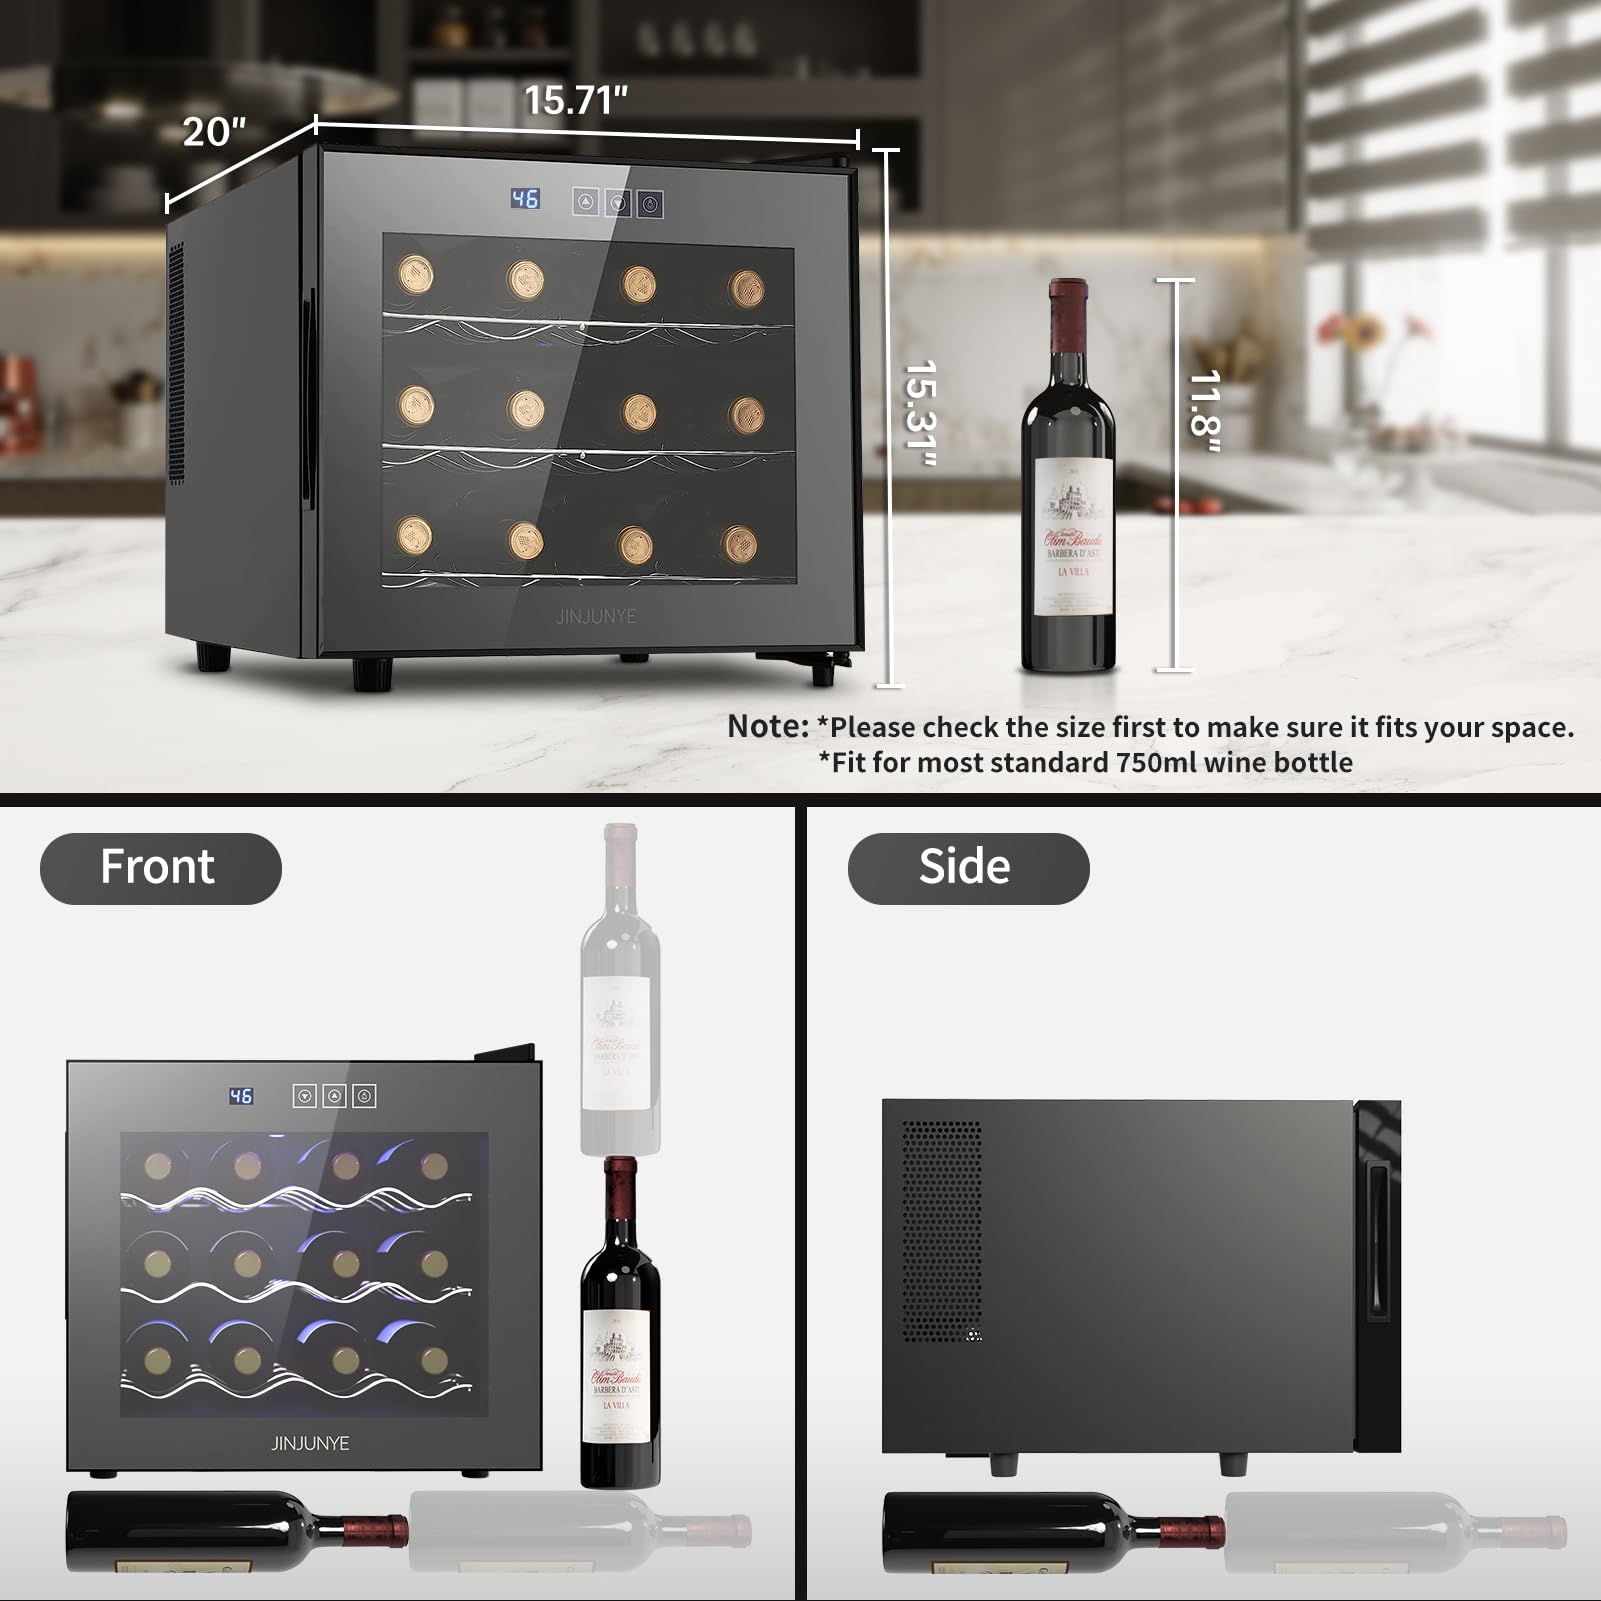 JINJUNYE Wine Cooler Refrigerator, Wine Fridge Small Countertop with Digital Temperature Control, 12 Bottle Mini Freestanding Wine Cellar for Wine, Beer, Gift for Wine Lover